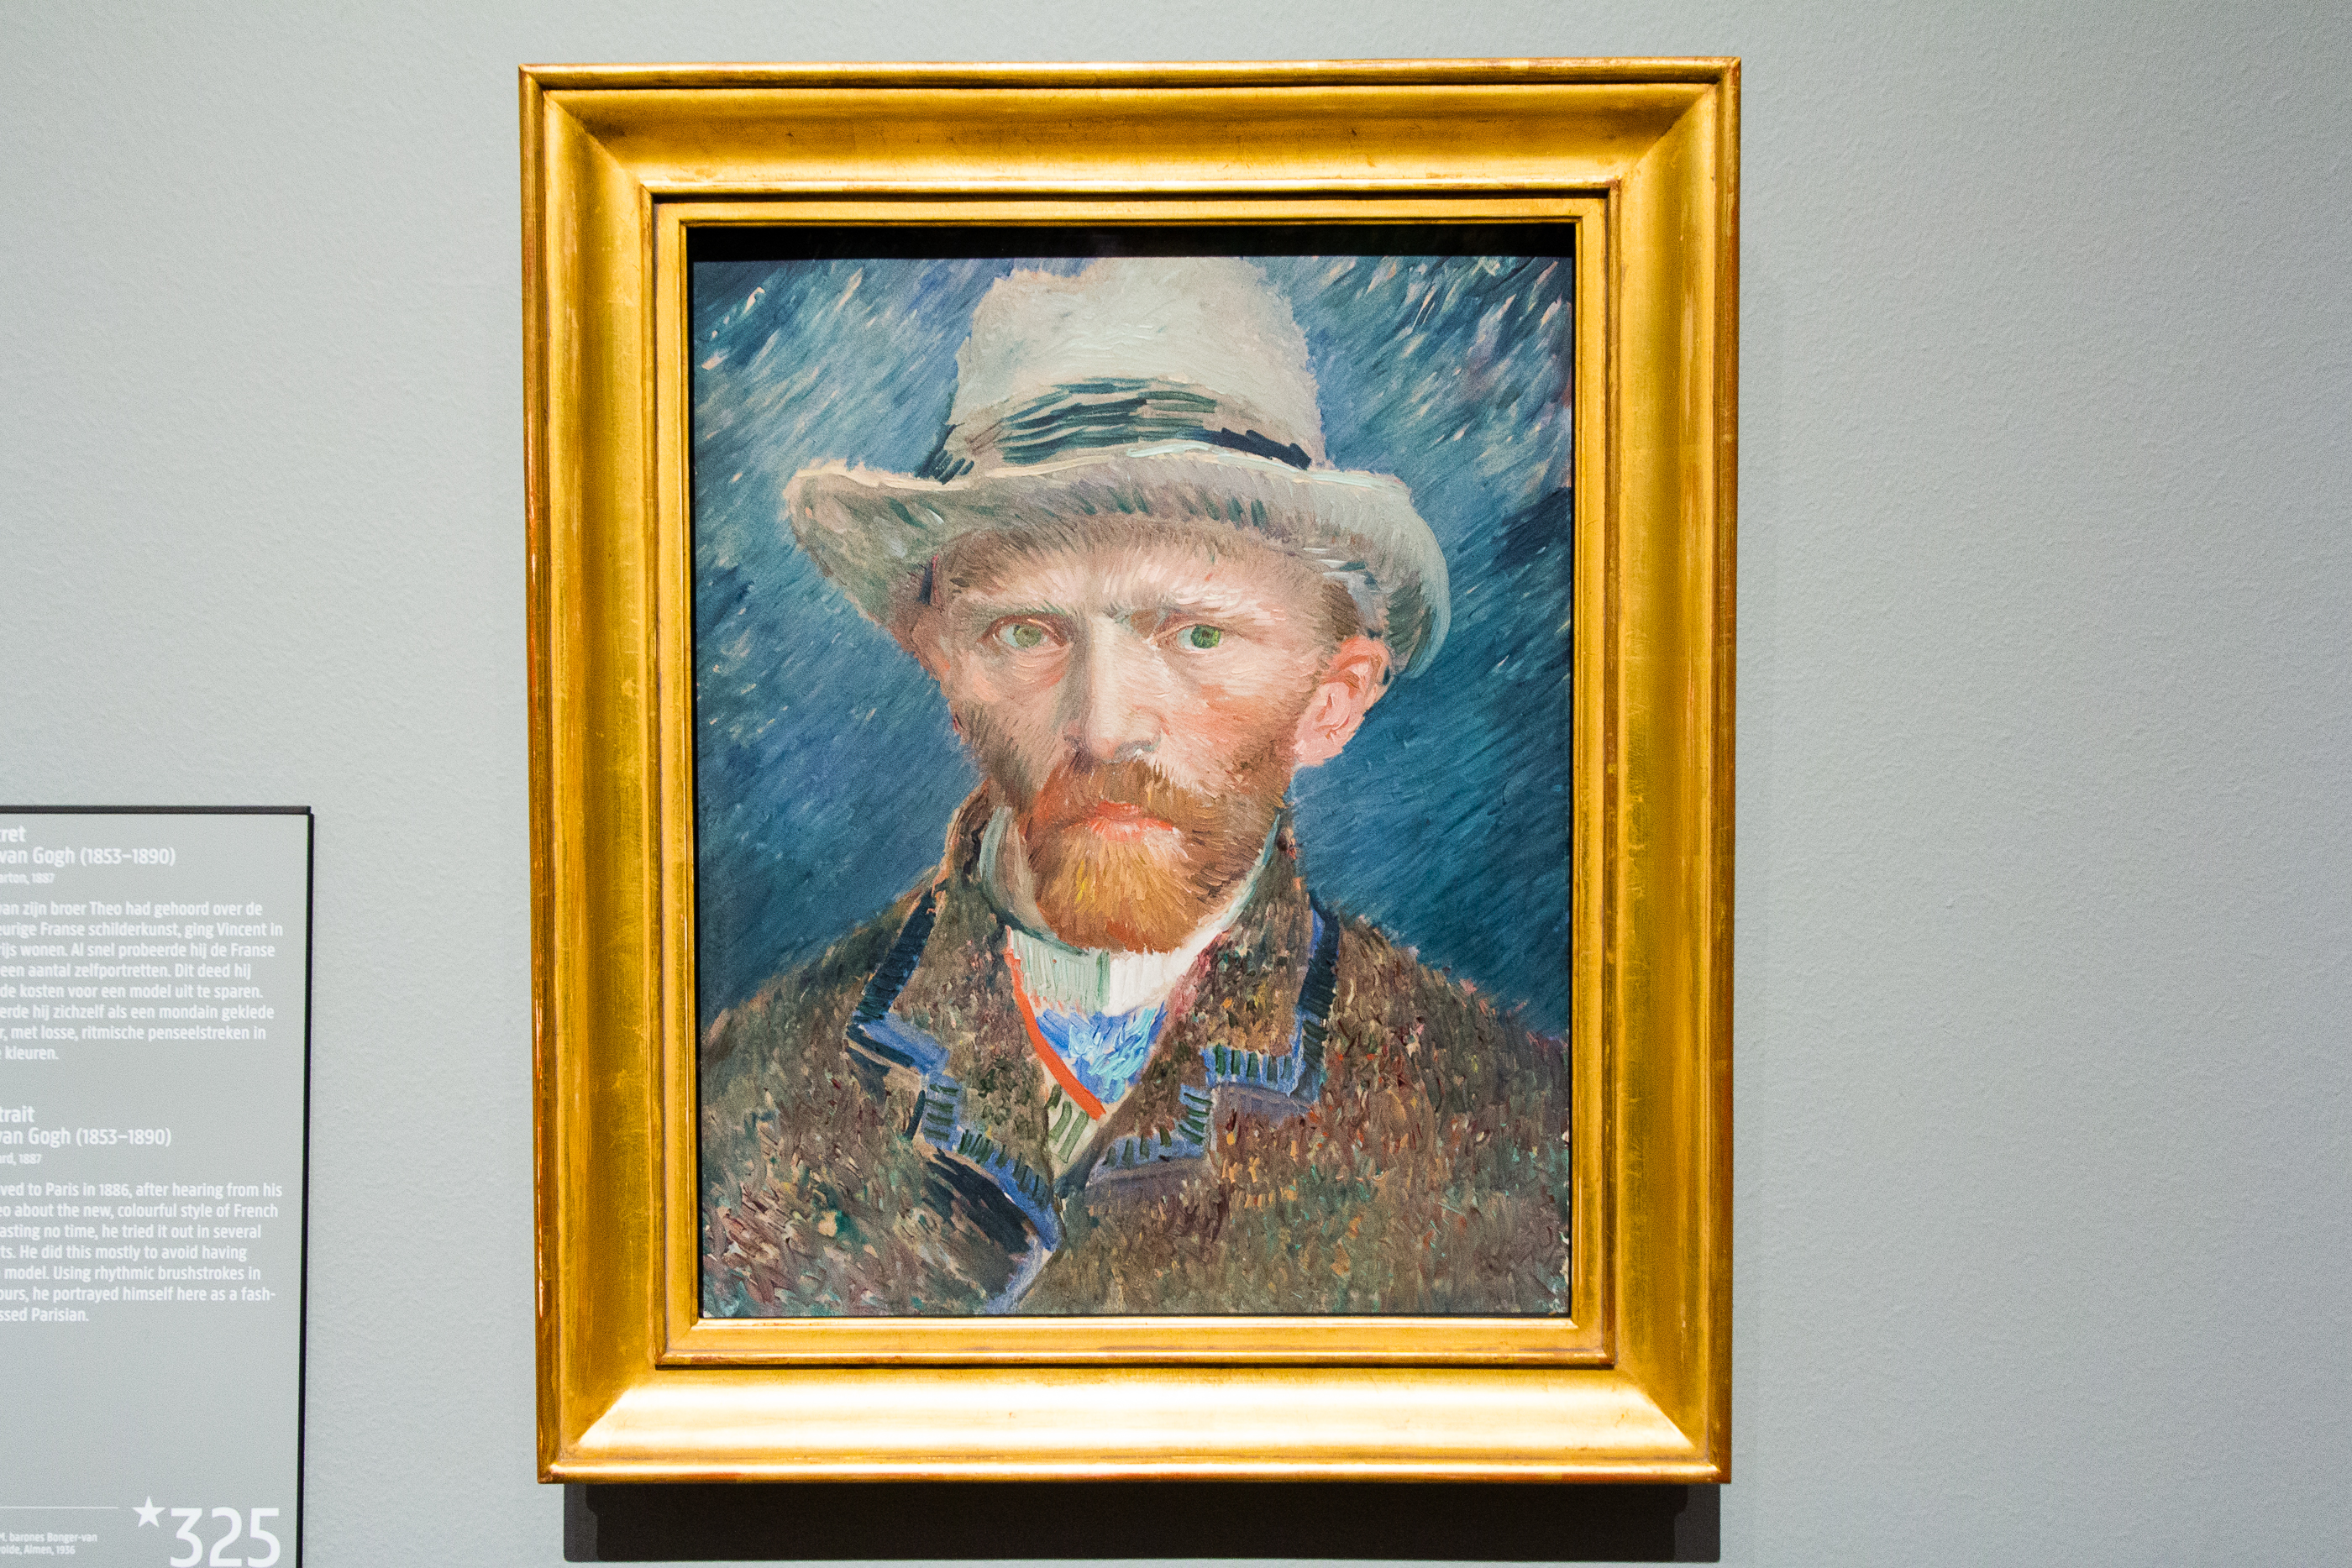 File:AMSTRDM 210217 Rijksmuseum Van Gogh 01.jpg - Wikimedia Commons